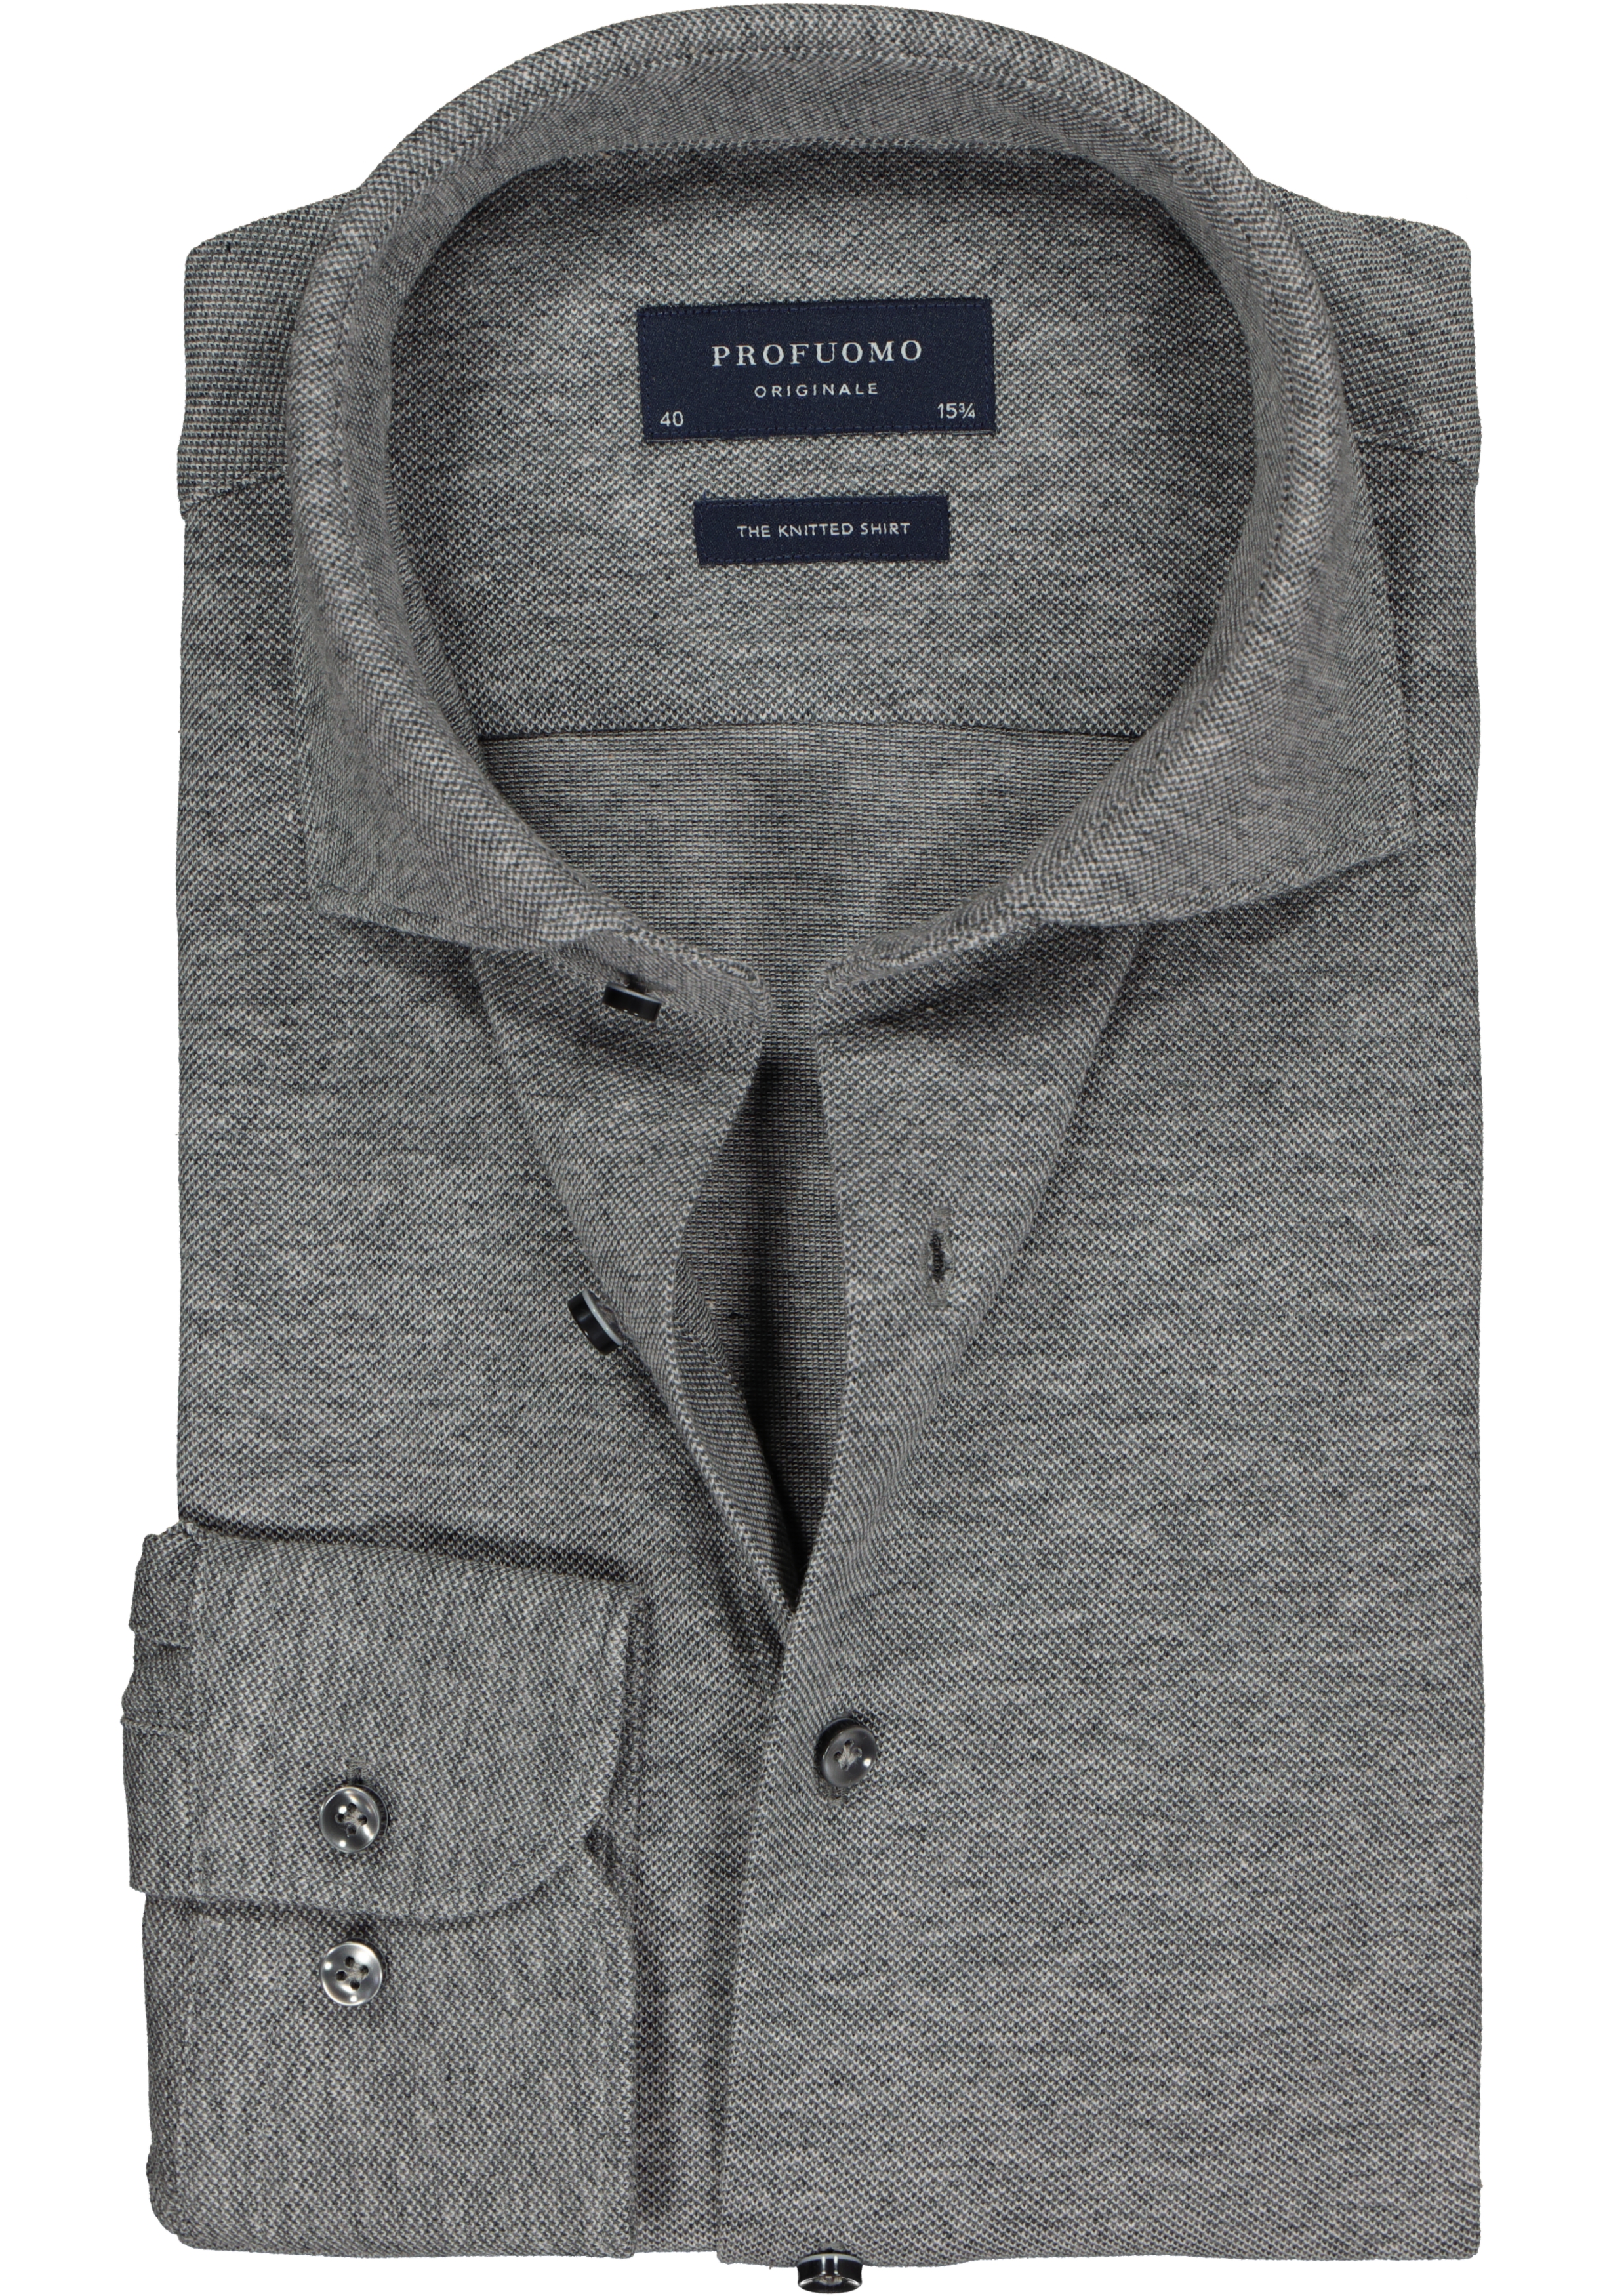 Profuomo Originale slim fit jersey overhemd, knitted shirt pique, antraciet grijs melange